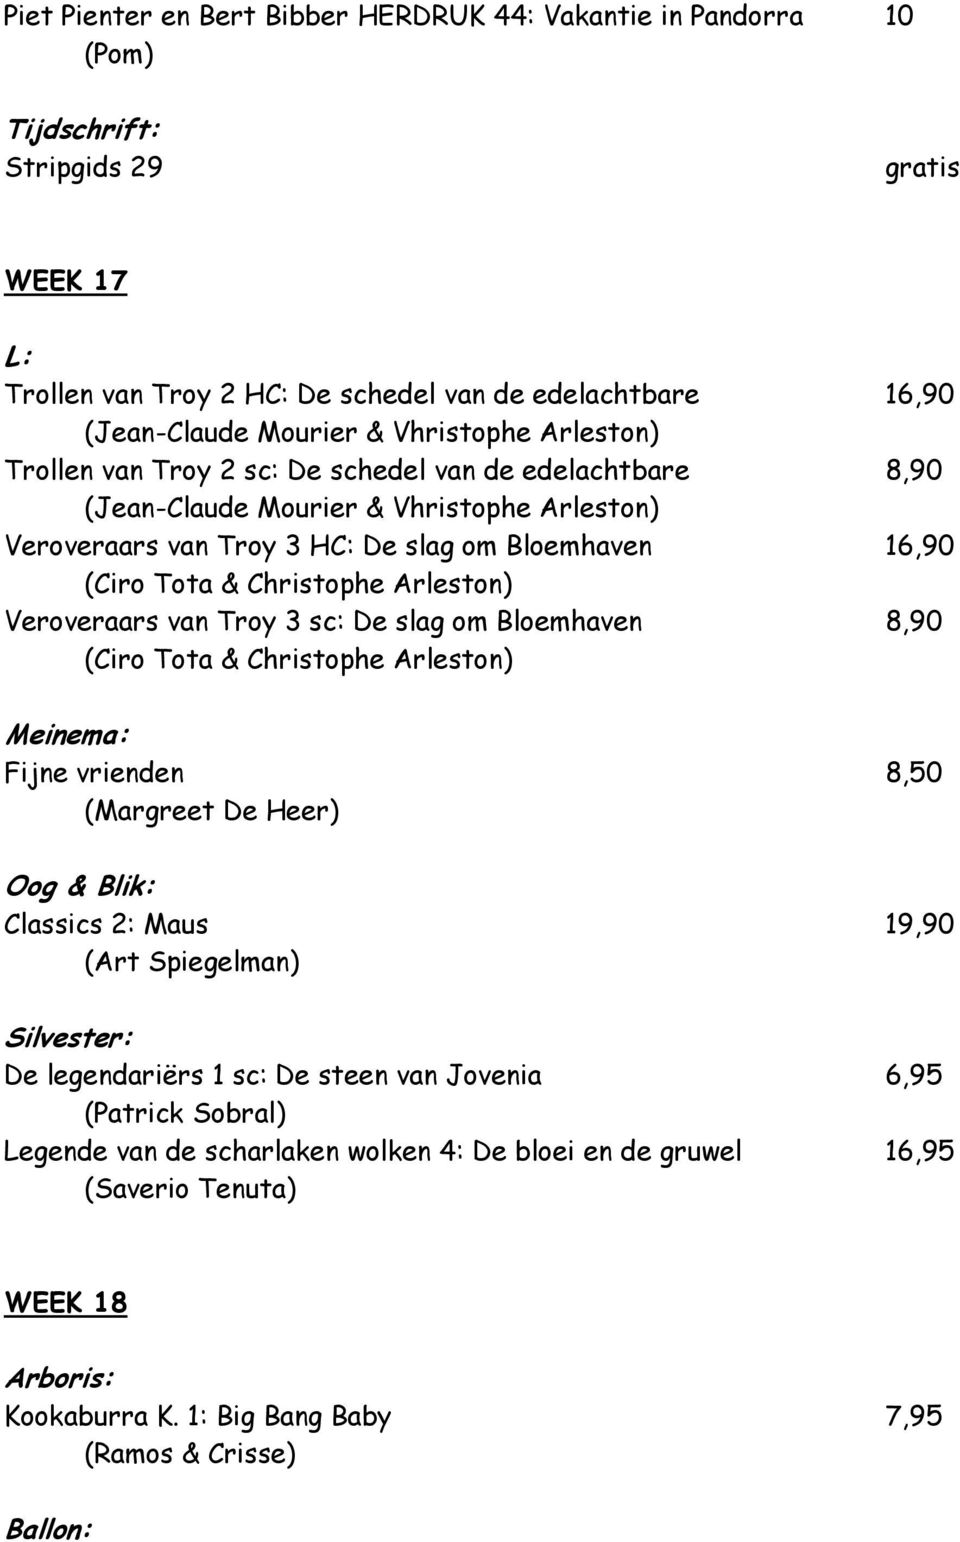 Christophe Arleston) Veroveraars van Troy 3 sc: De slag om Bloemhaven 8,90 (Ciro Tota & Christophe Arleston) Meinema: Fijne vrienden 8,50 (Margreet De Heer) Oog & Blik: Classics 2: Maus 19,90 (Art